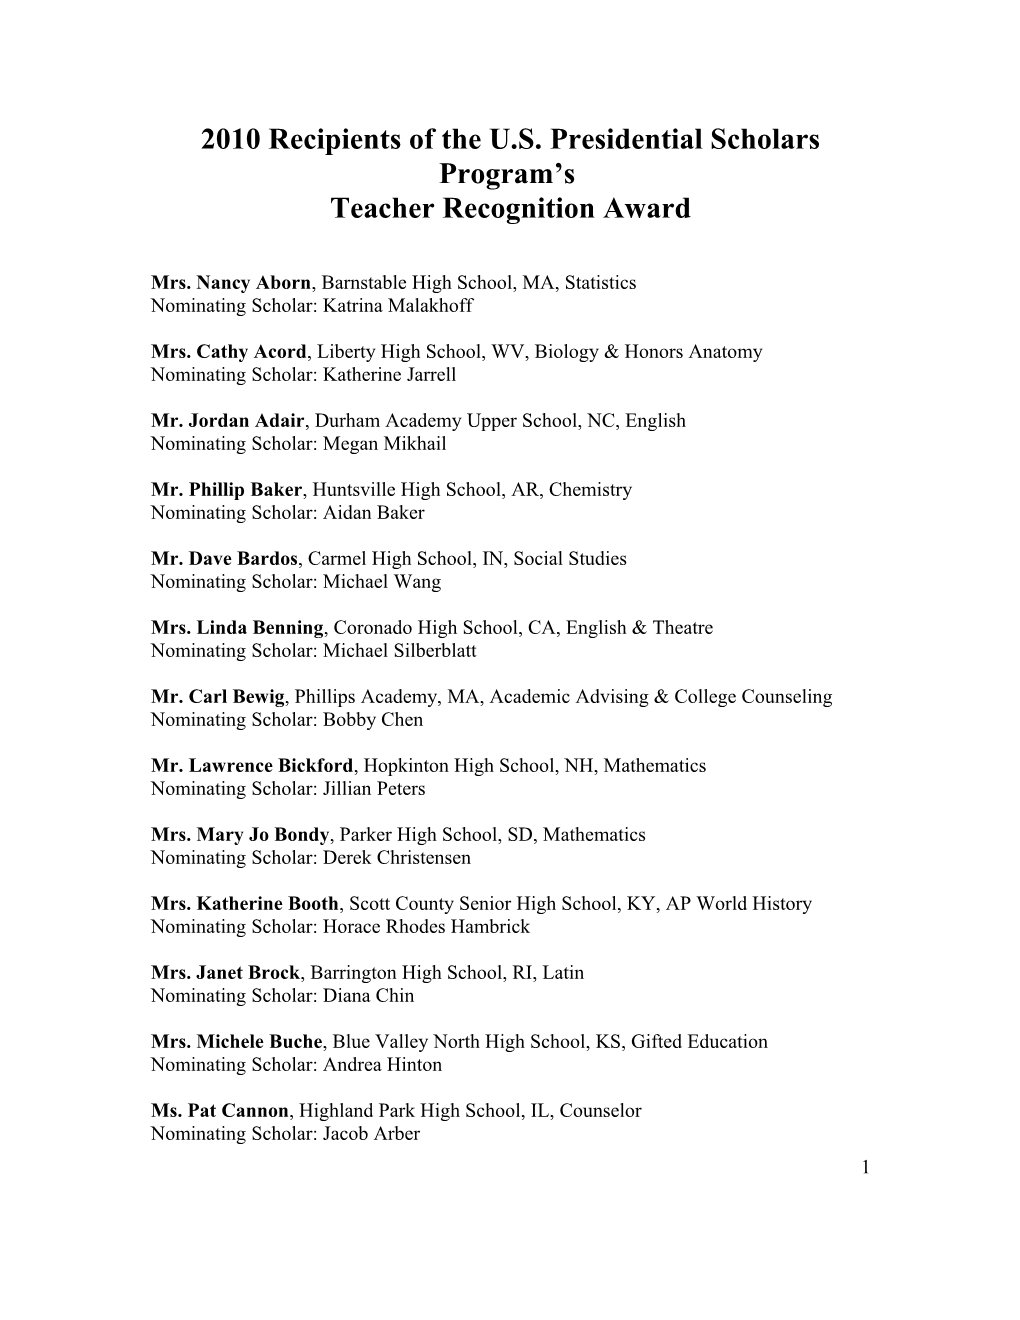 2010 Teacher Recognition Award: Presidential Scholars Program's May 21, 2010 (Msword)